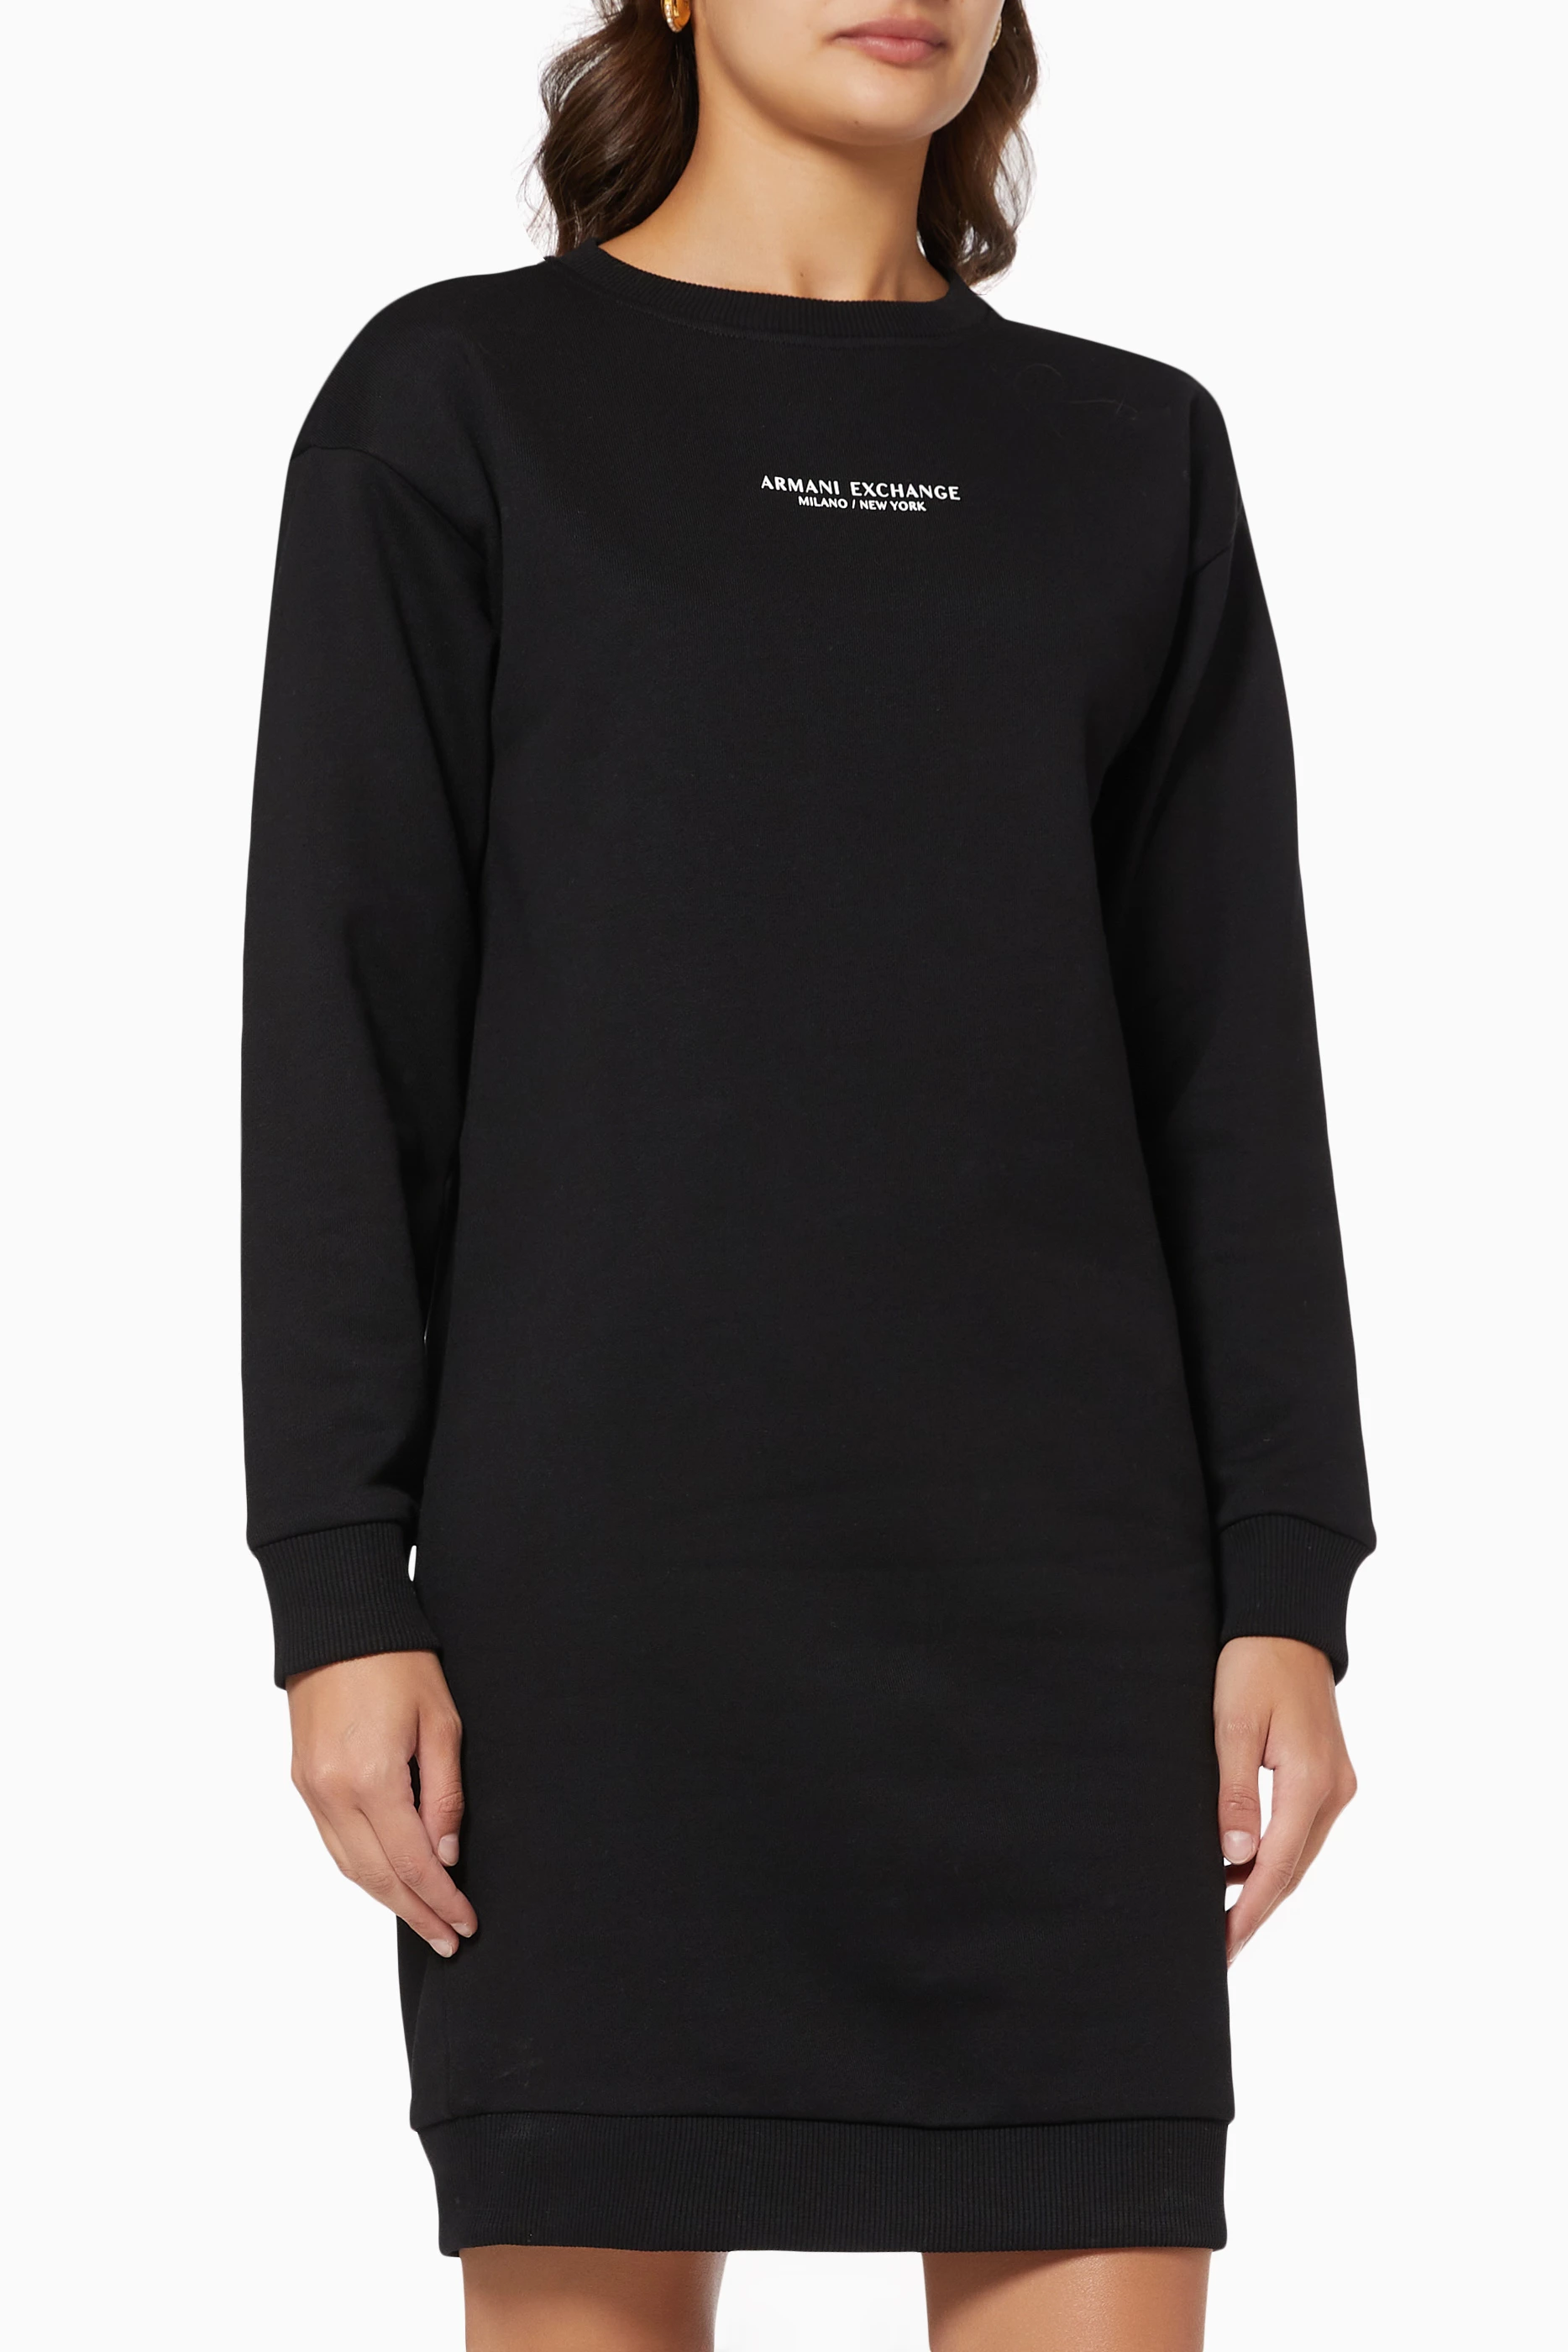 Shop Armani Exchange Black AX Sweatshirt Dress in Jersey for WOMEN | Ounass  Saudi Arabia